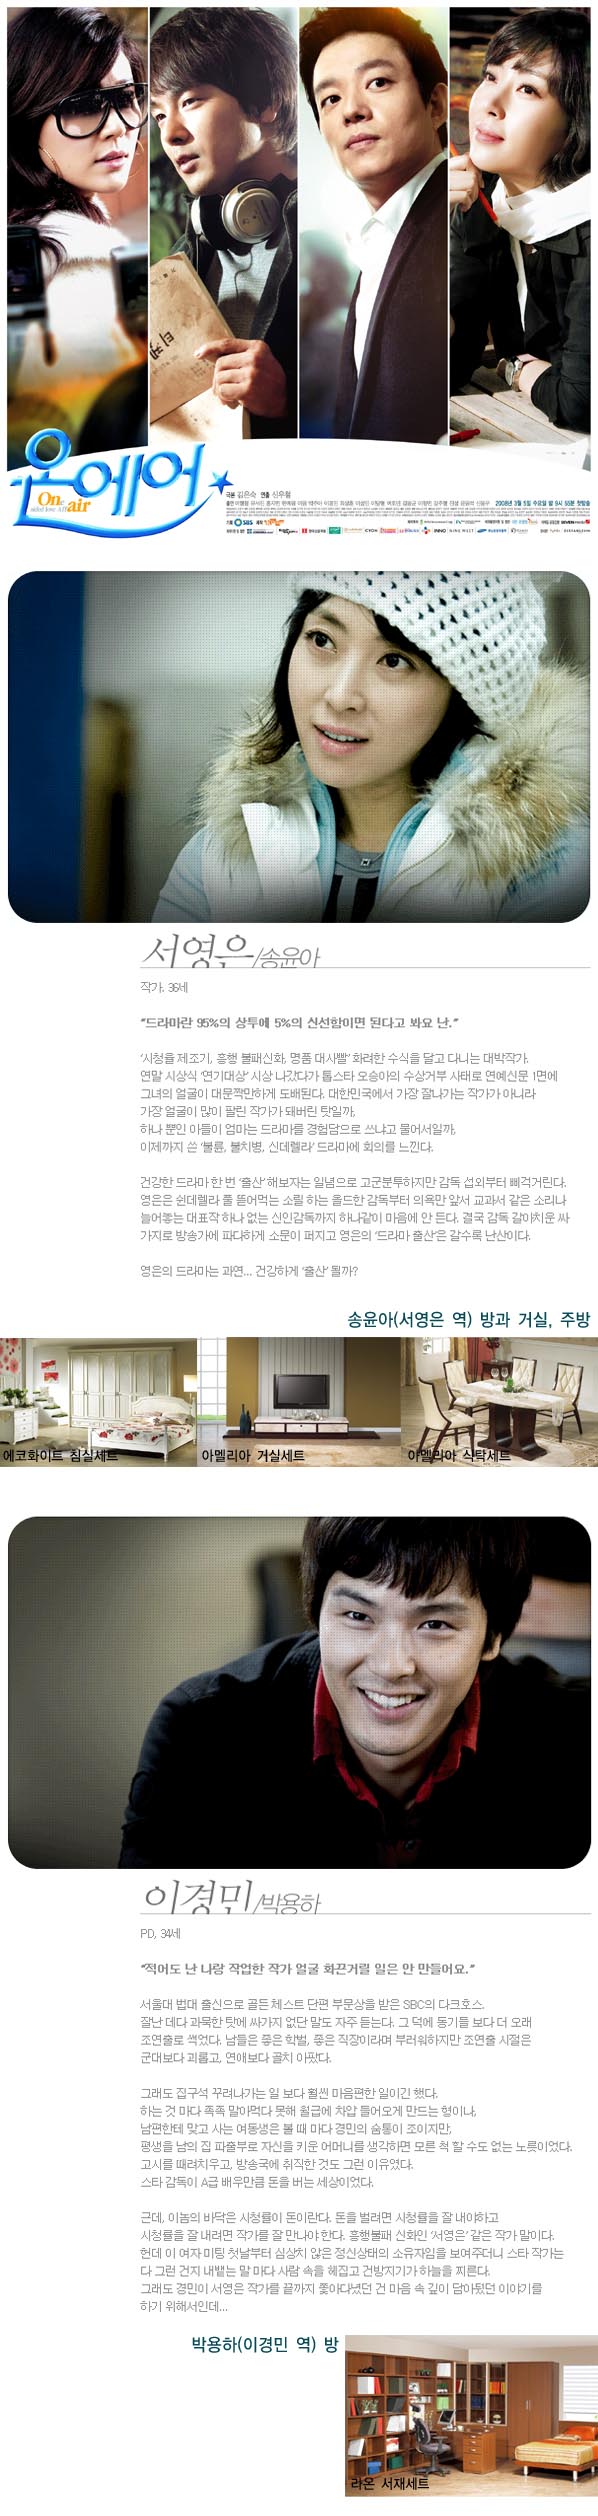 SBS-TV 드라마스폐셜 “온에어” 가구협찬